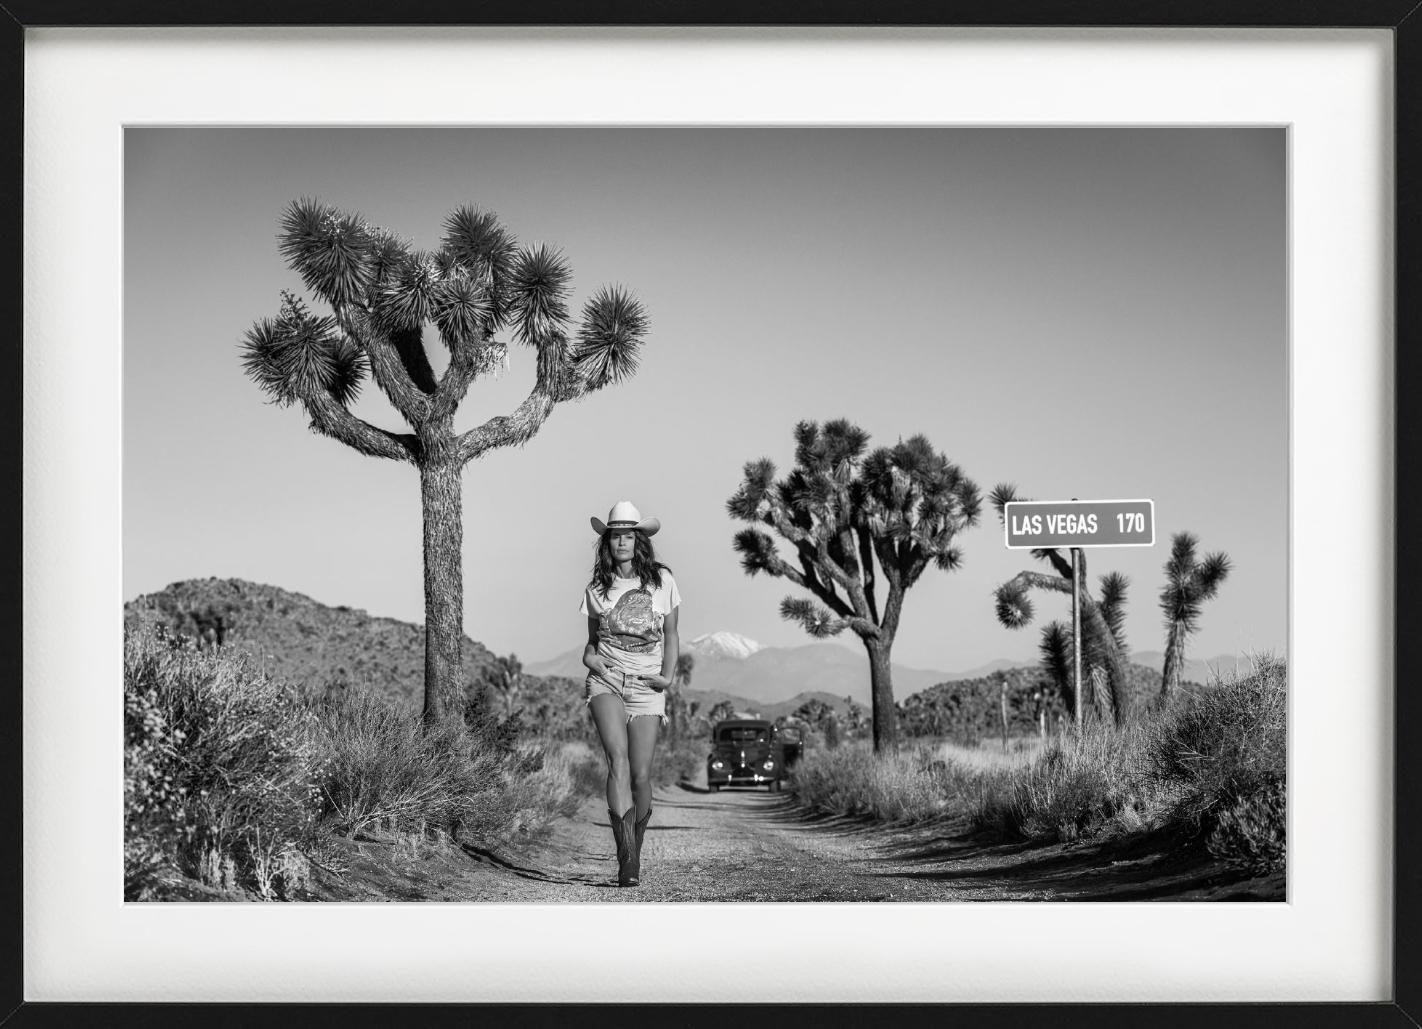 Sin City - Supermodel Cindy Crawford Walking in the desert, Joshua Tree - Photograph by David Yarrow